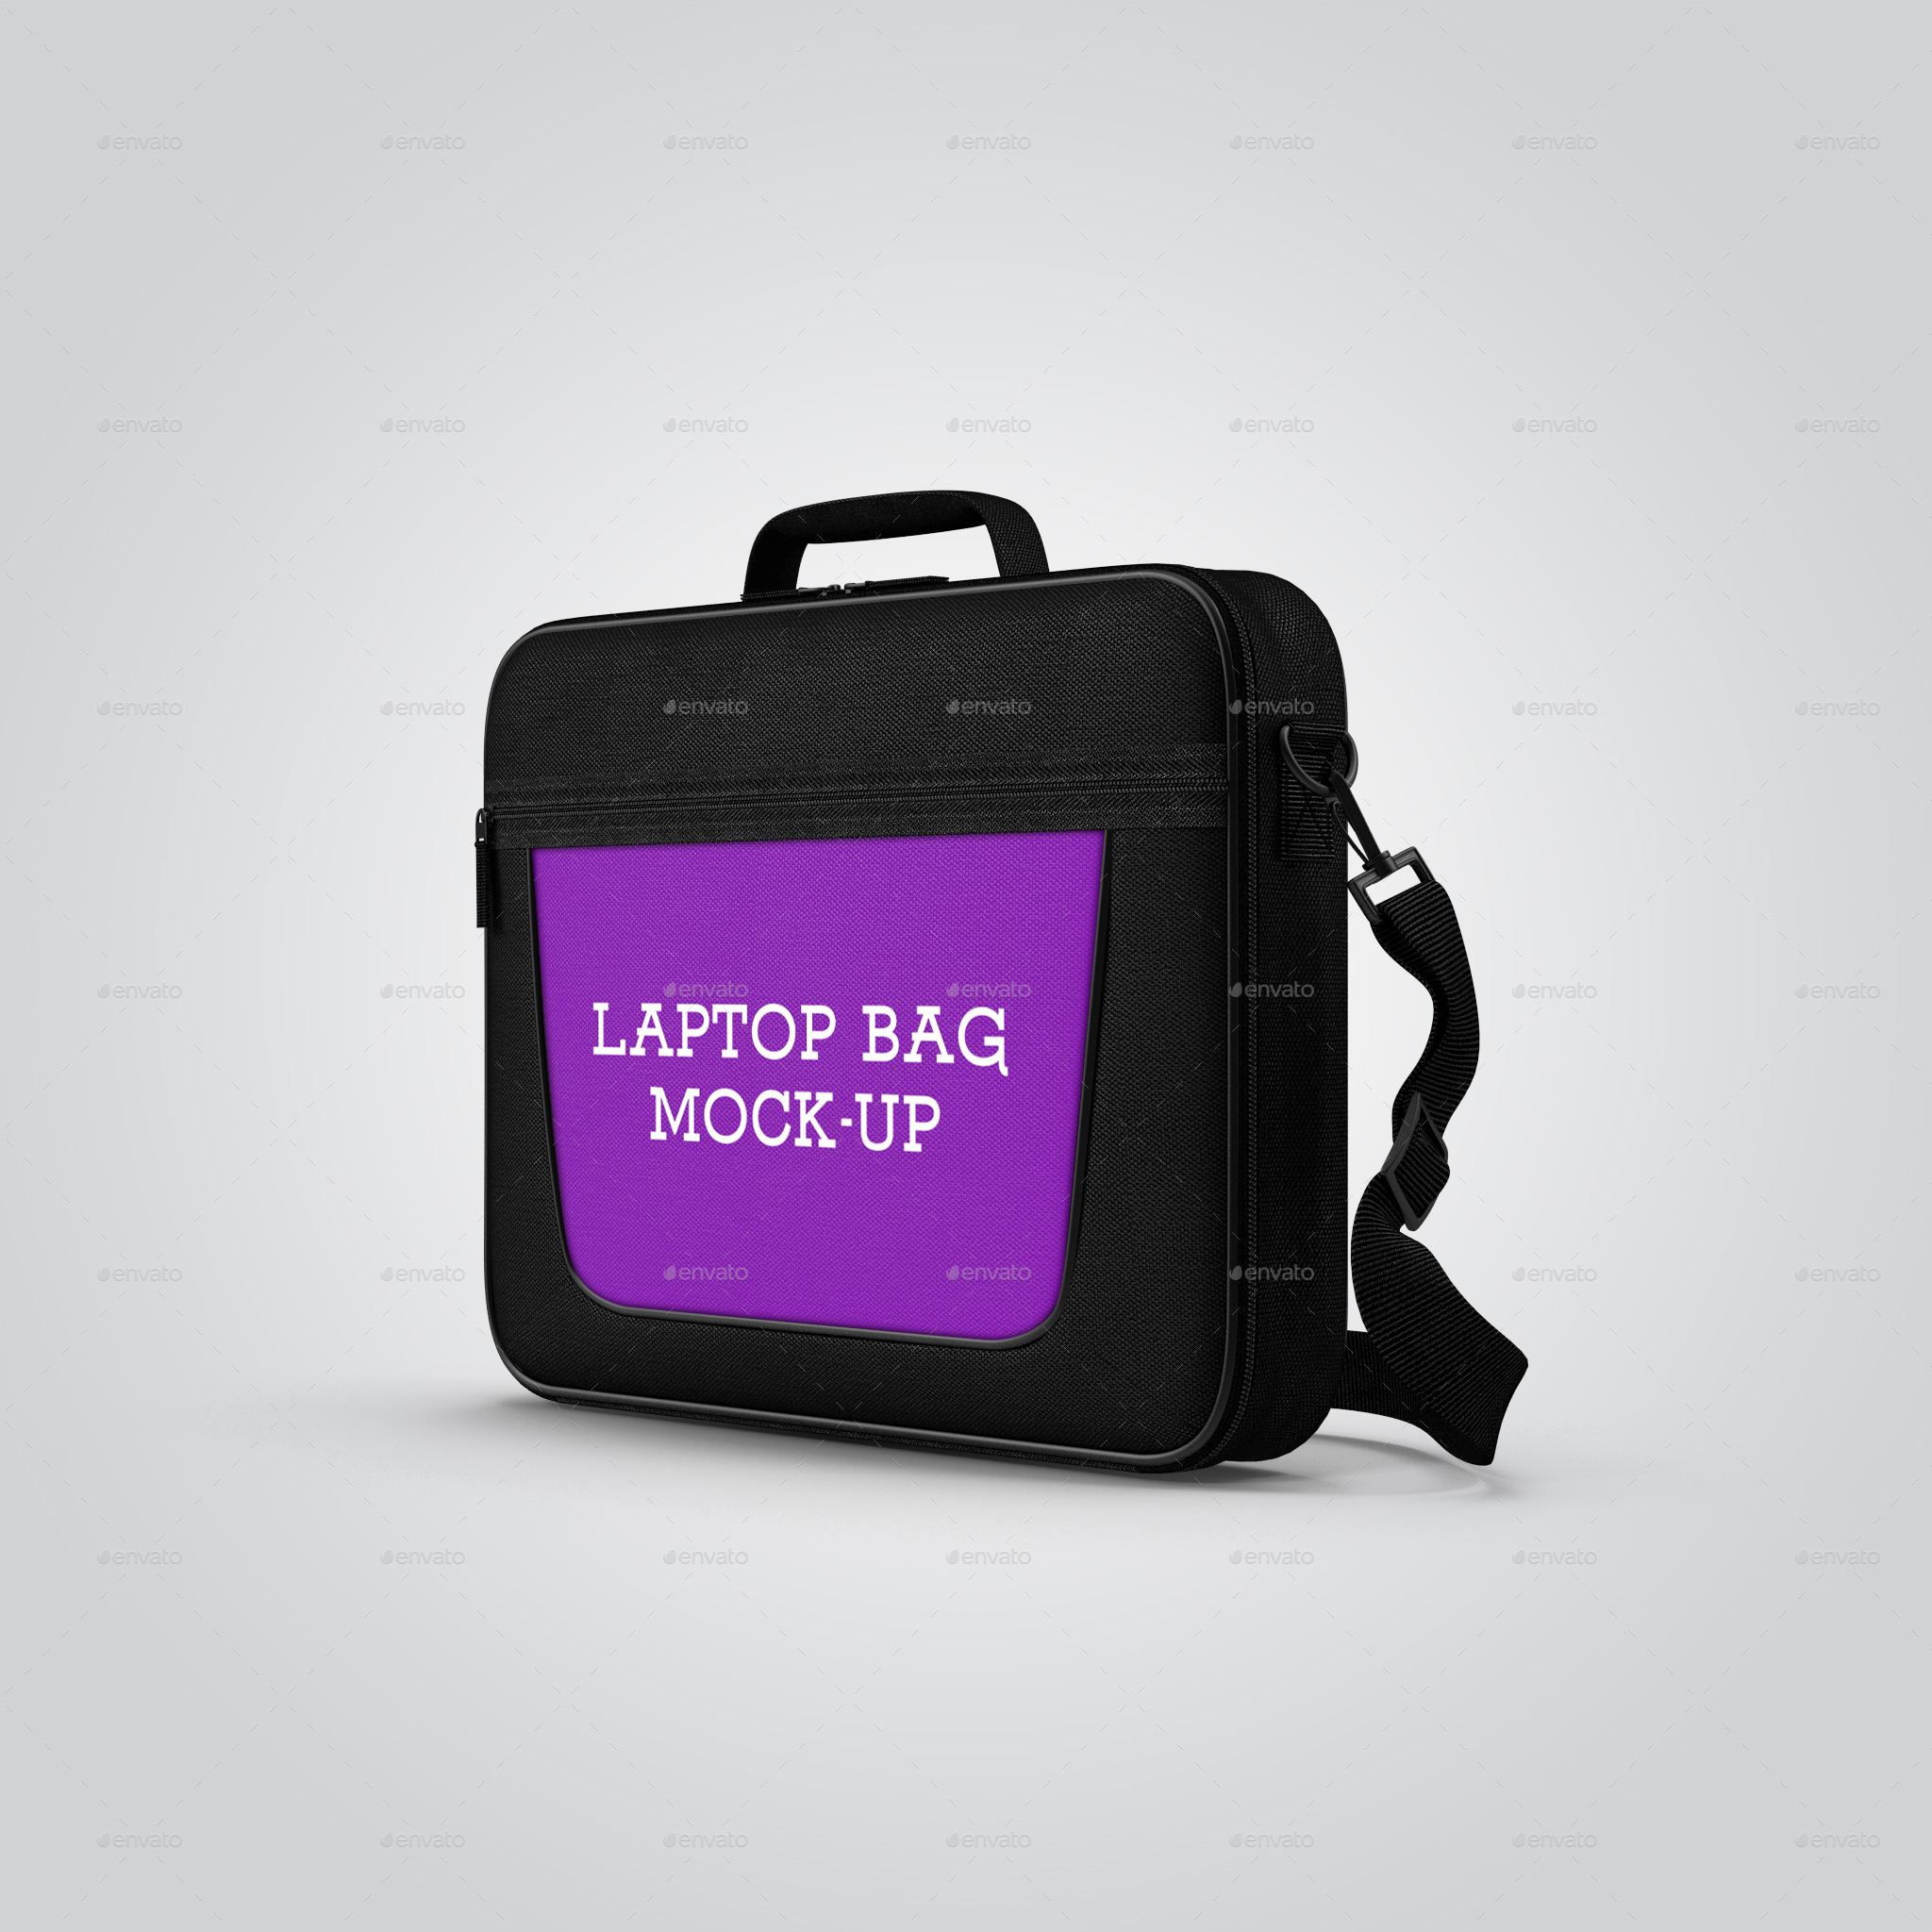 Download Laptop Sleeve Mockup Free - Free Download Image 2020